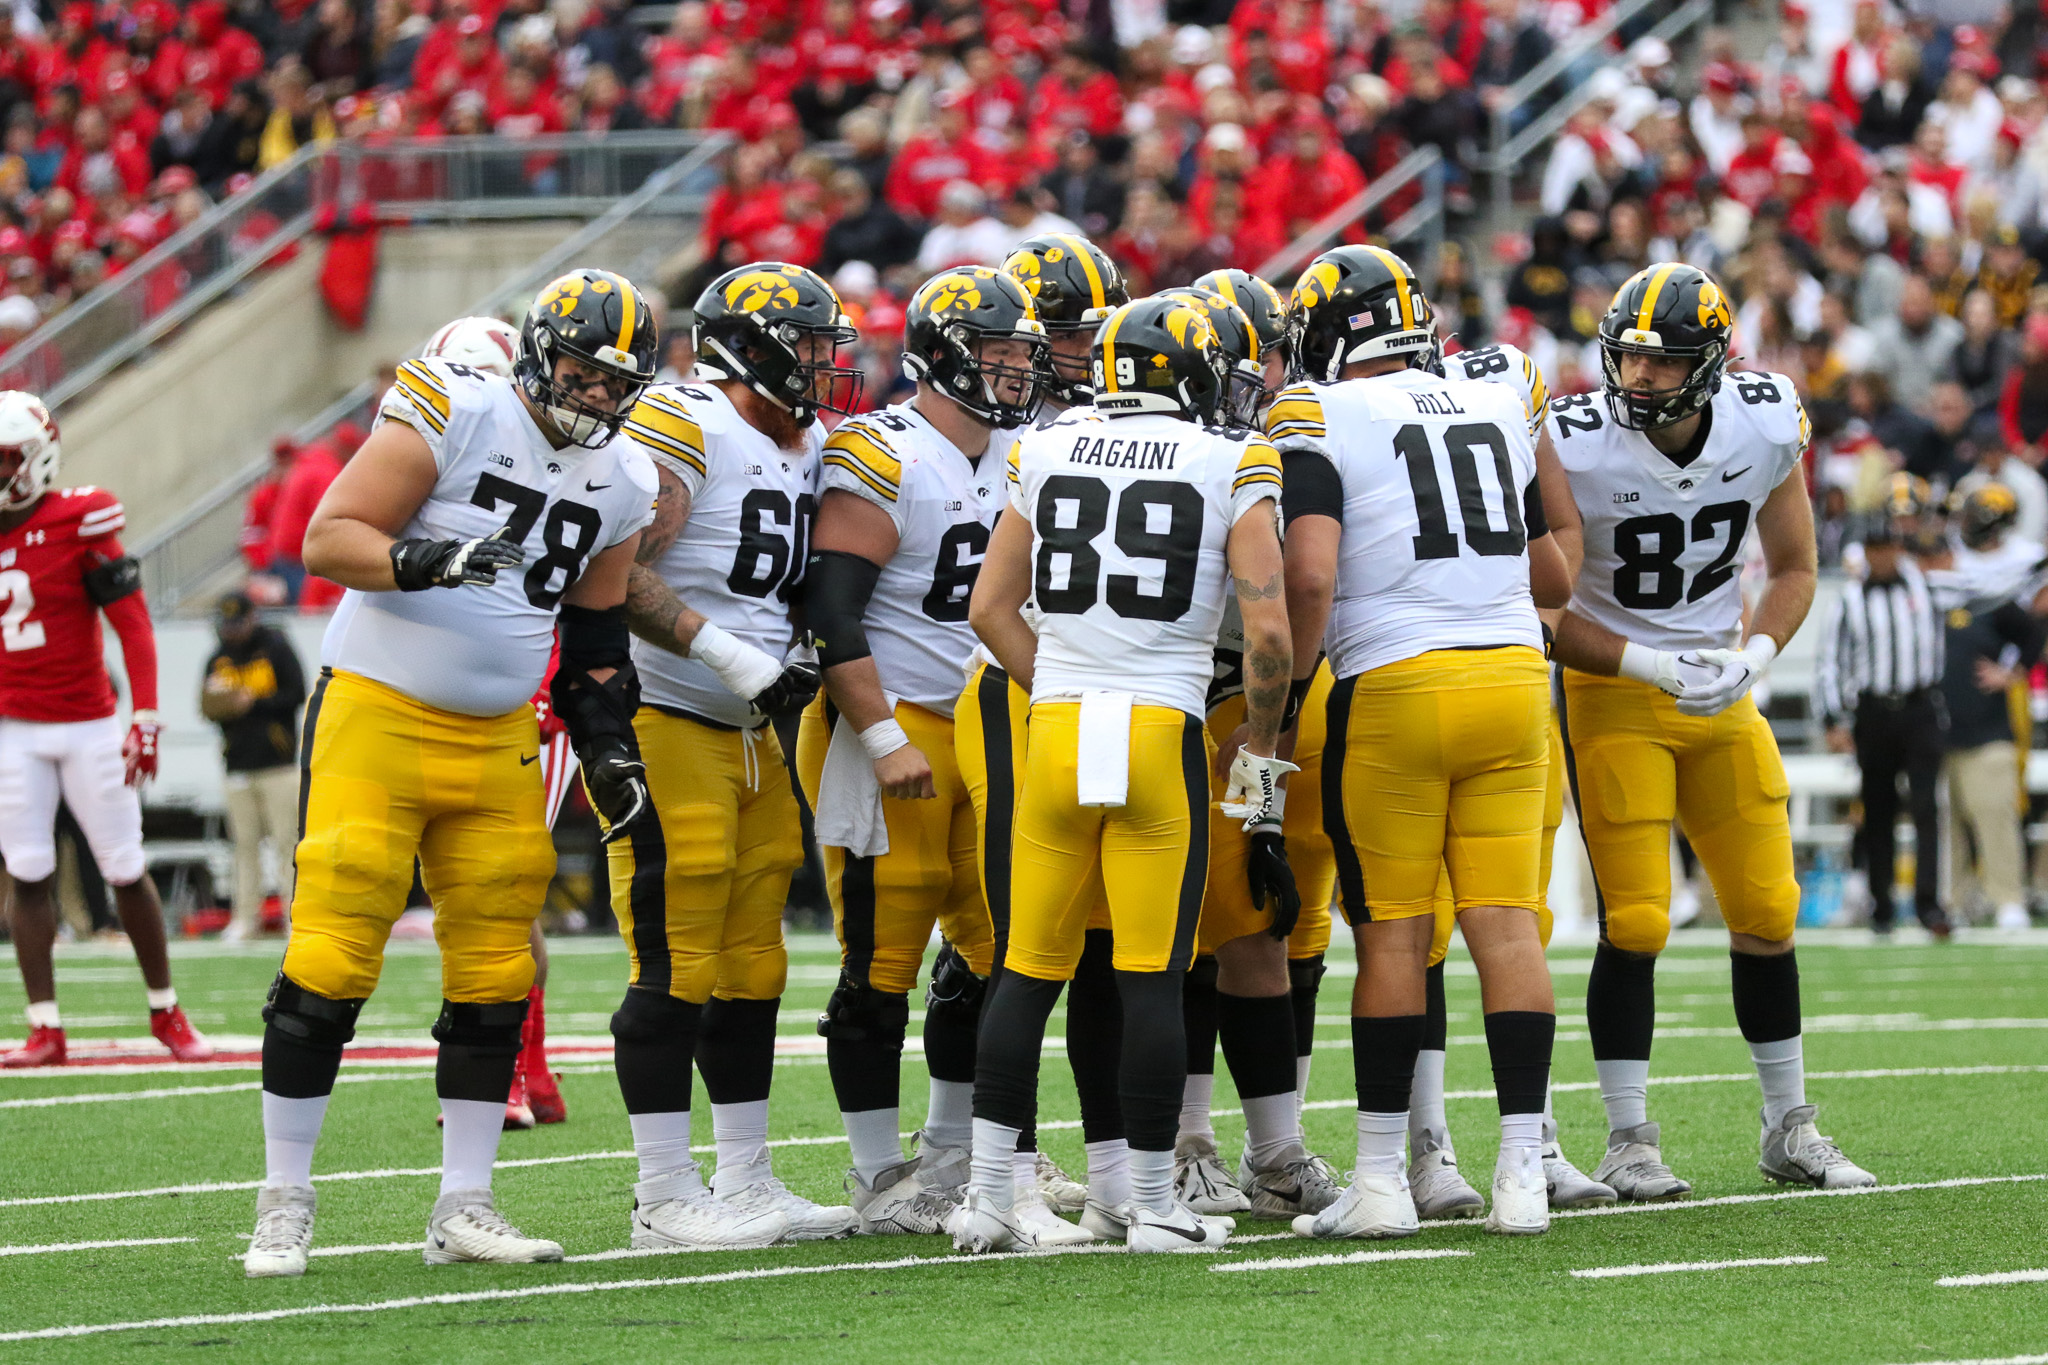 Iowa football: Preseason photos of the 2019 Iowa Hawkeyes football team